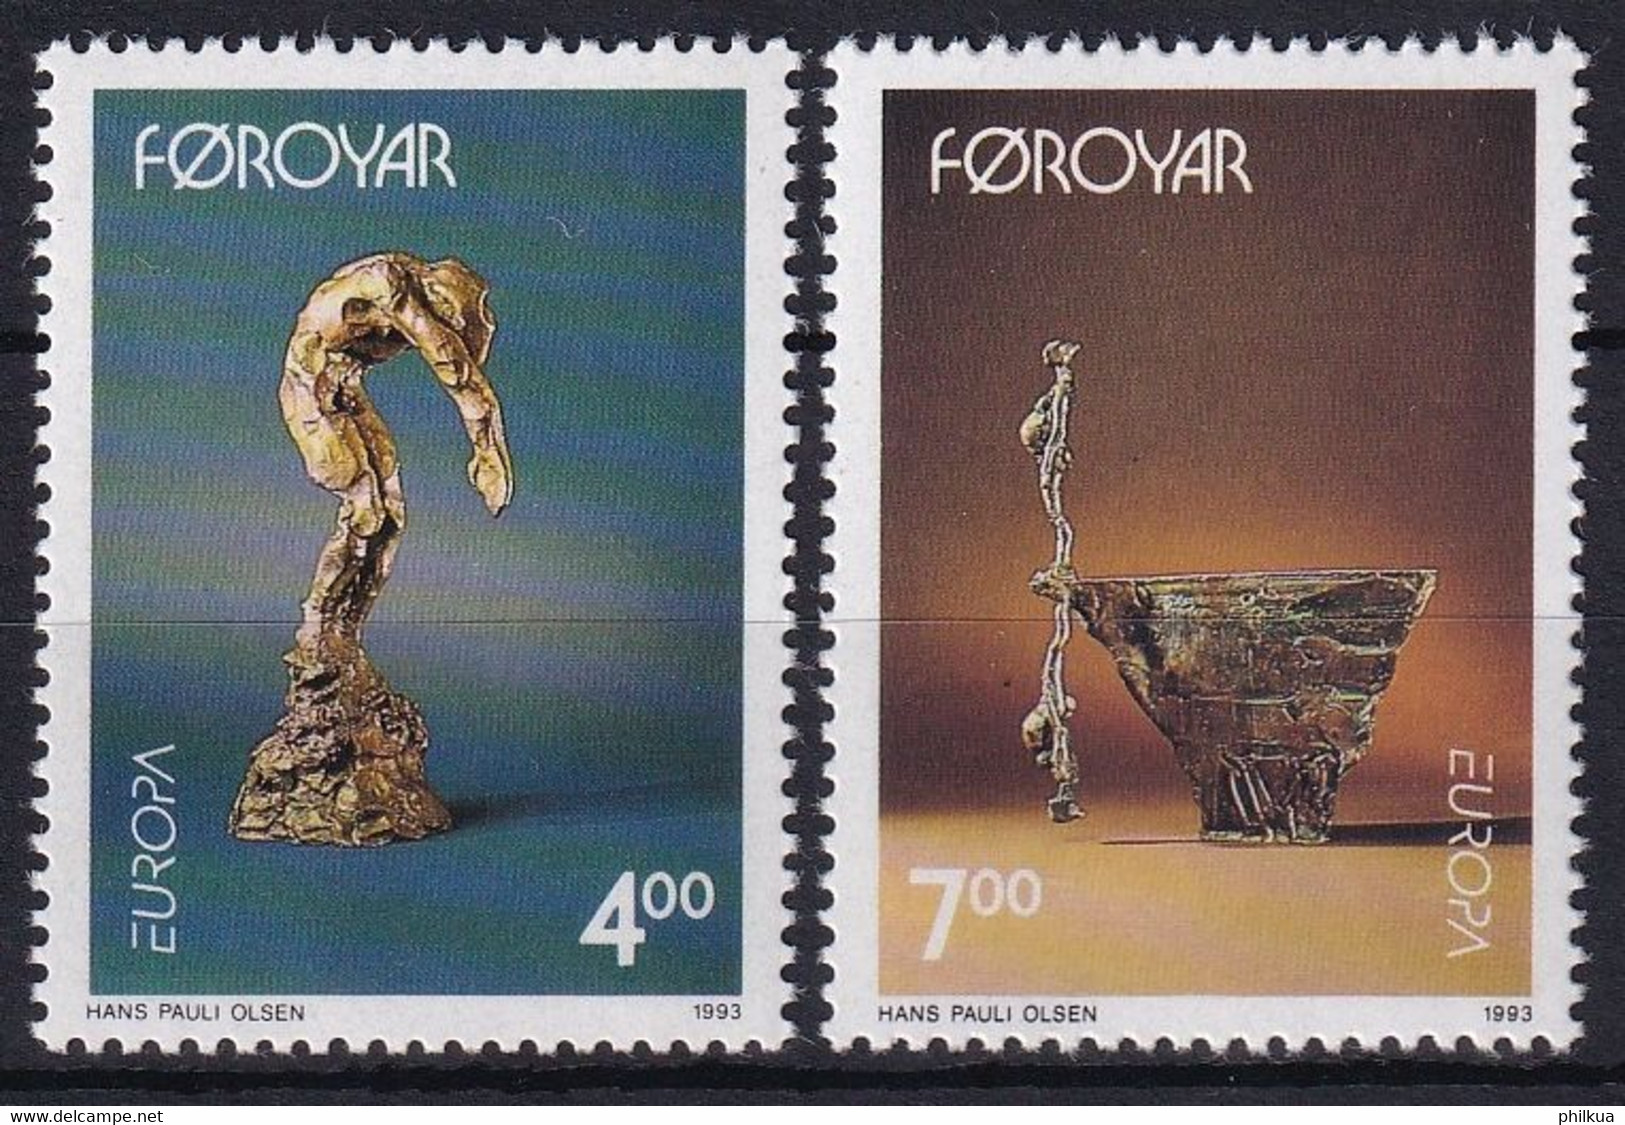 MiNr. 248 - 249 Dänemark Färöer 1993, 5. April. Europa: Zeitgenössische Kunst Postfrisch/**/MNH - Féroé (Iles)